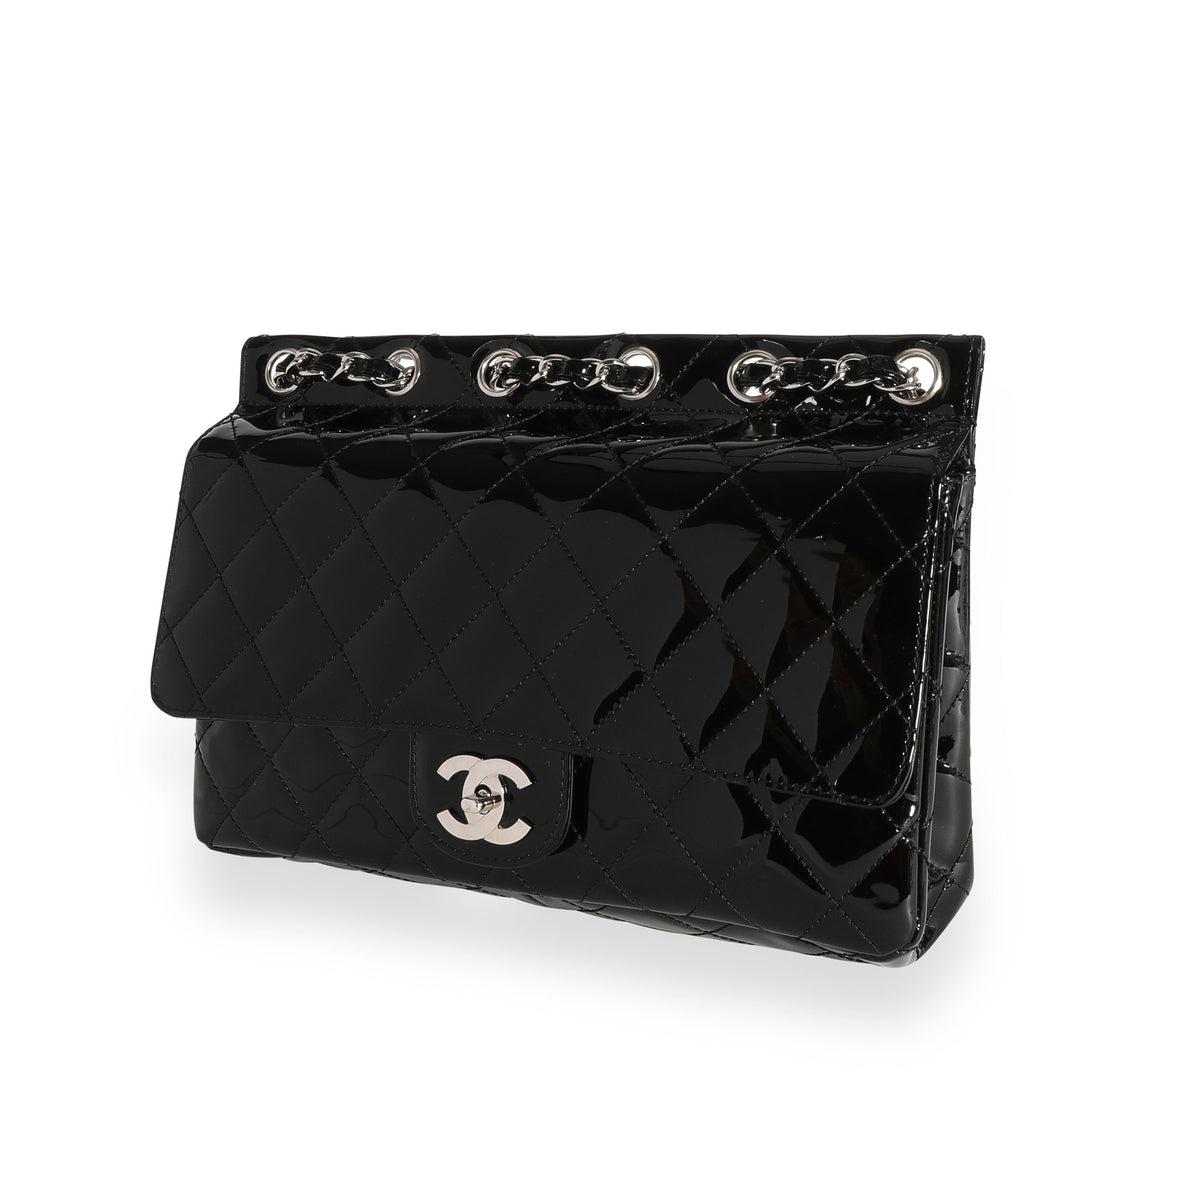 Bella Hadid Wore a $10,000 Chanel Messenger Bag